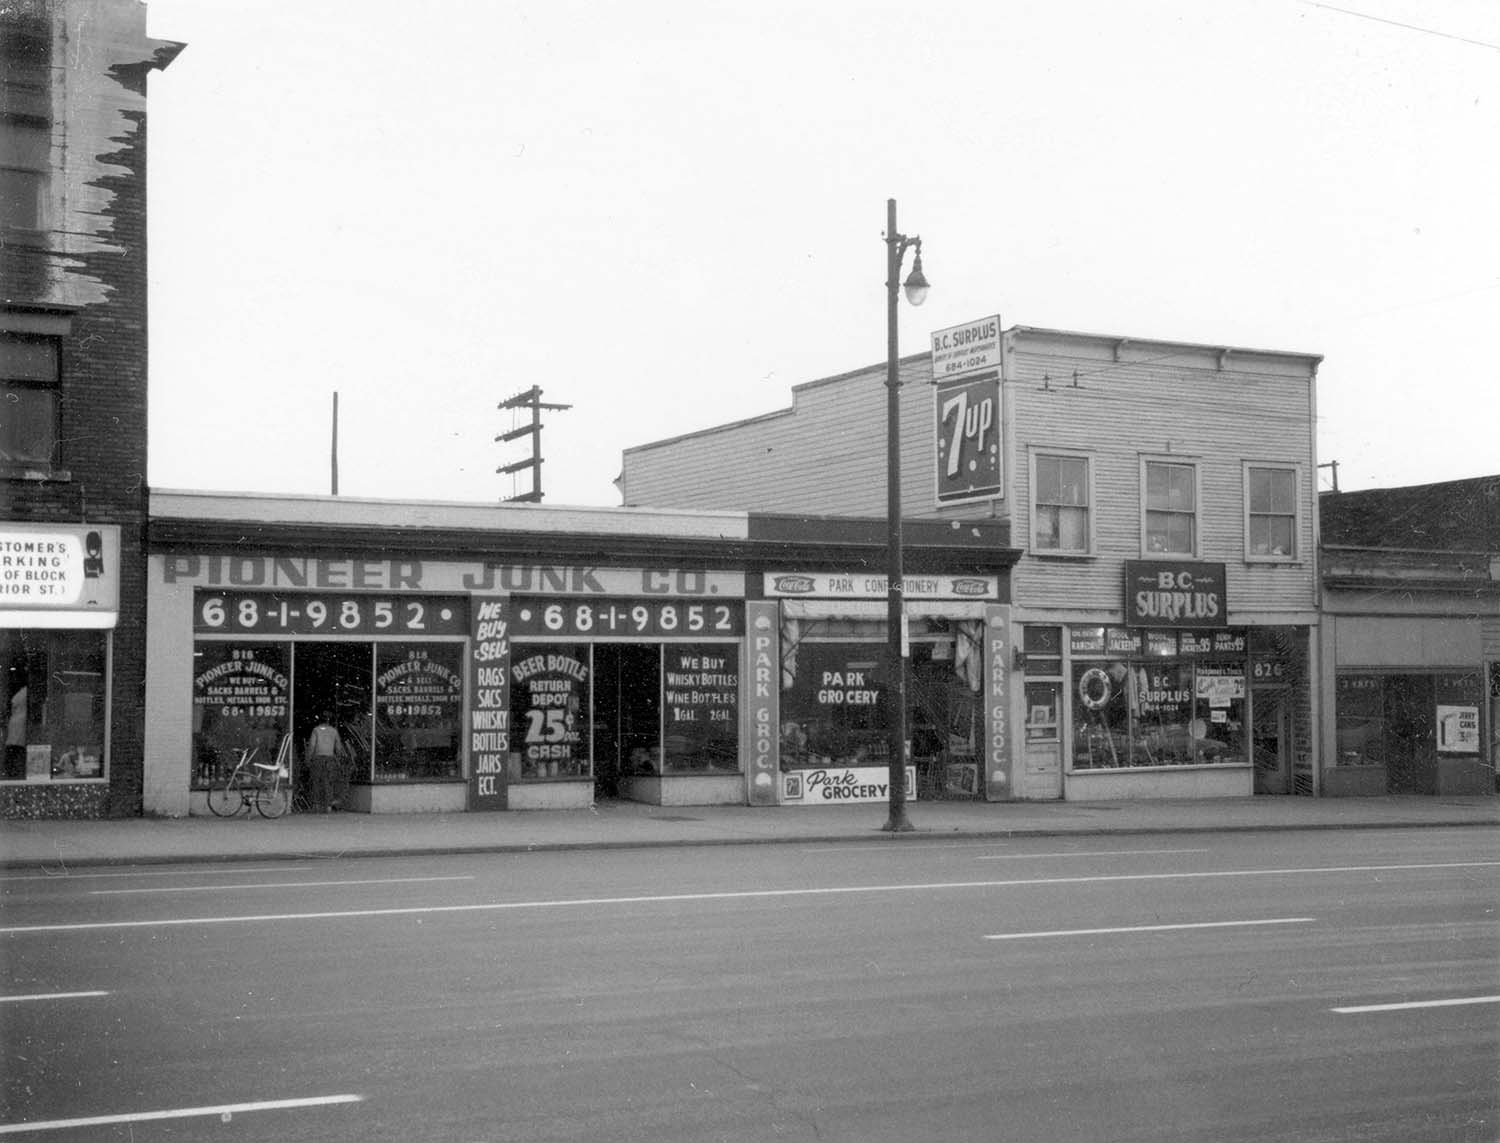 818 - 826 Main Street, 1970. Photograph shows Pioneer Junk Co. (818 Main Street), Park Grocery (822 Main Street) and BC Supplies (826 Main Street). Reference code COV-S168-: CVA 203-13